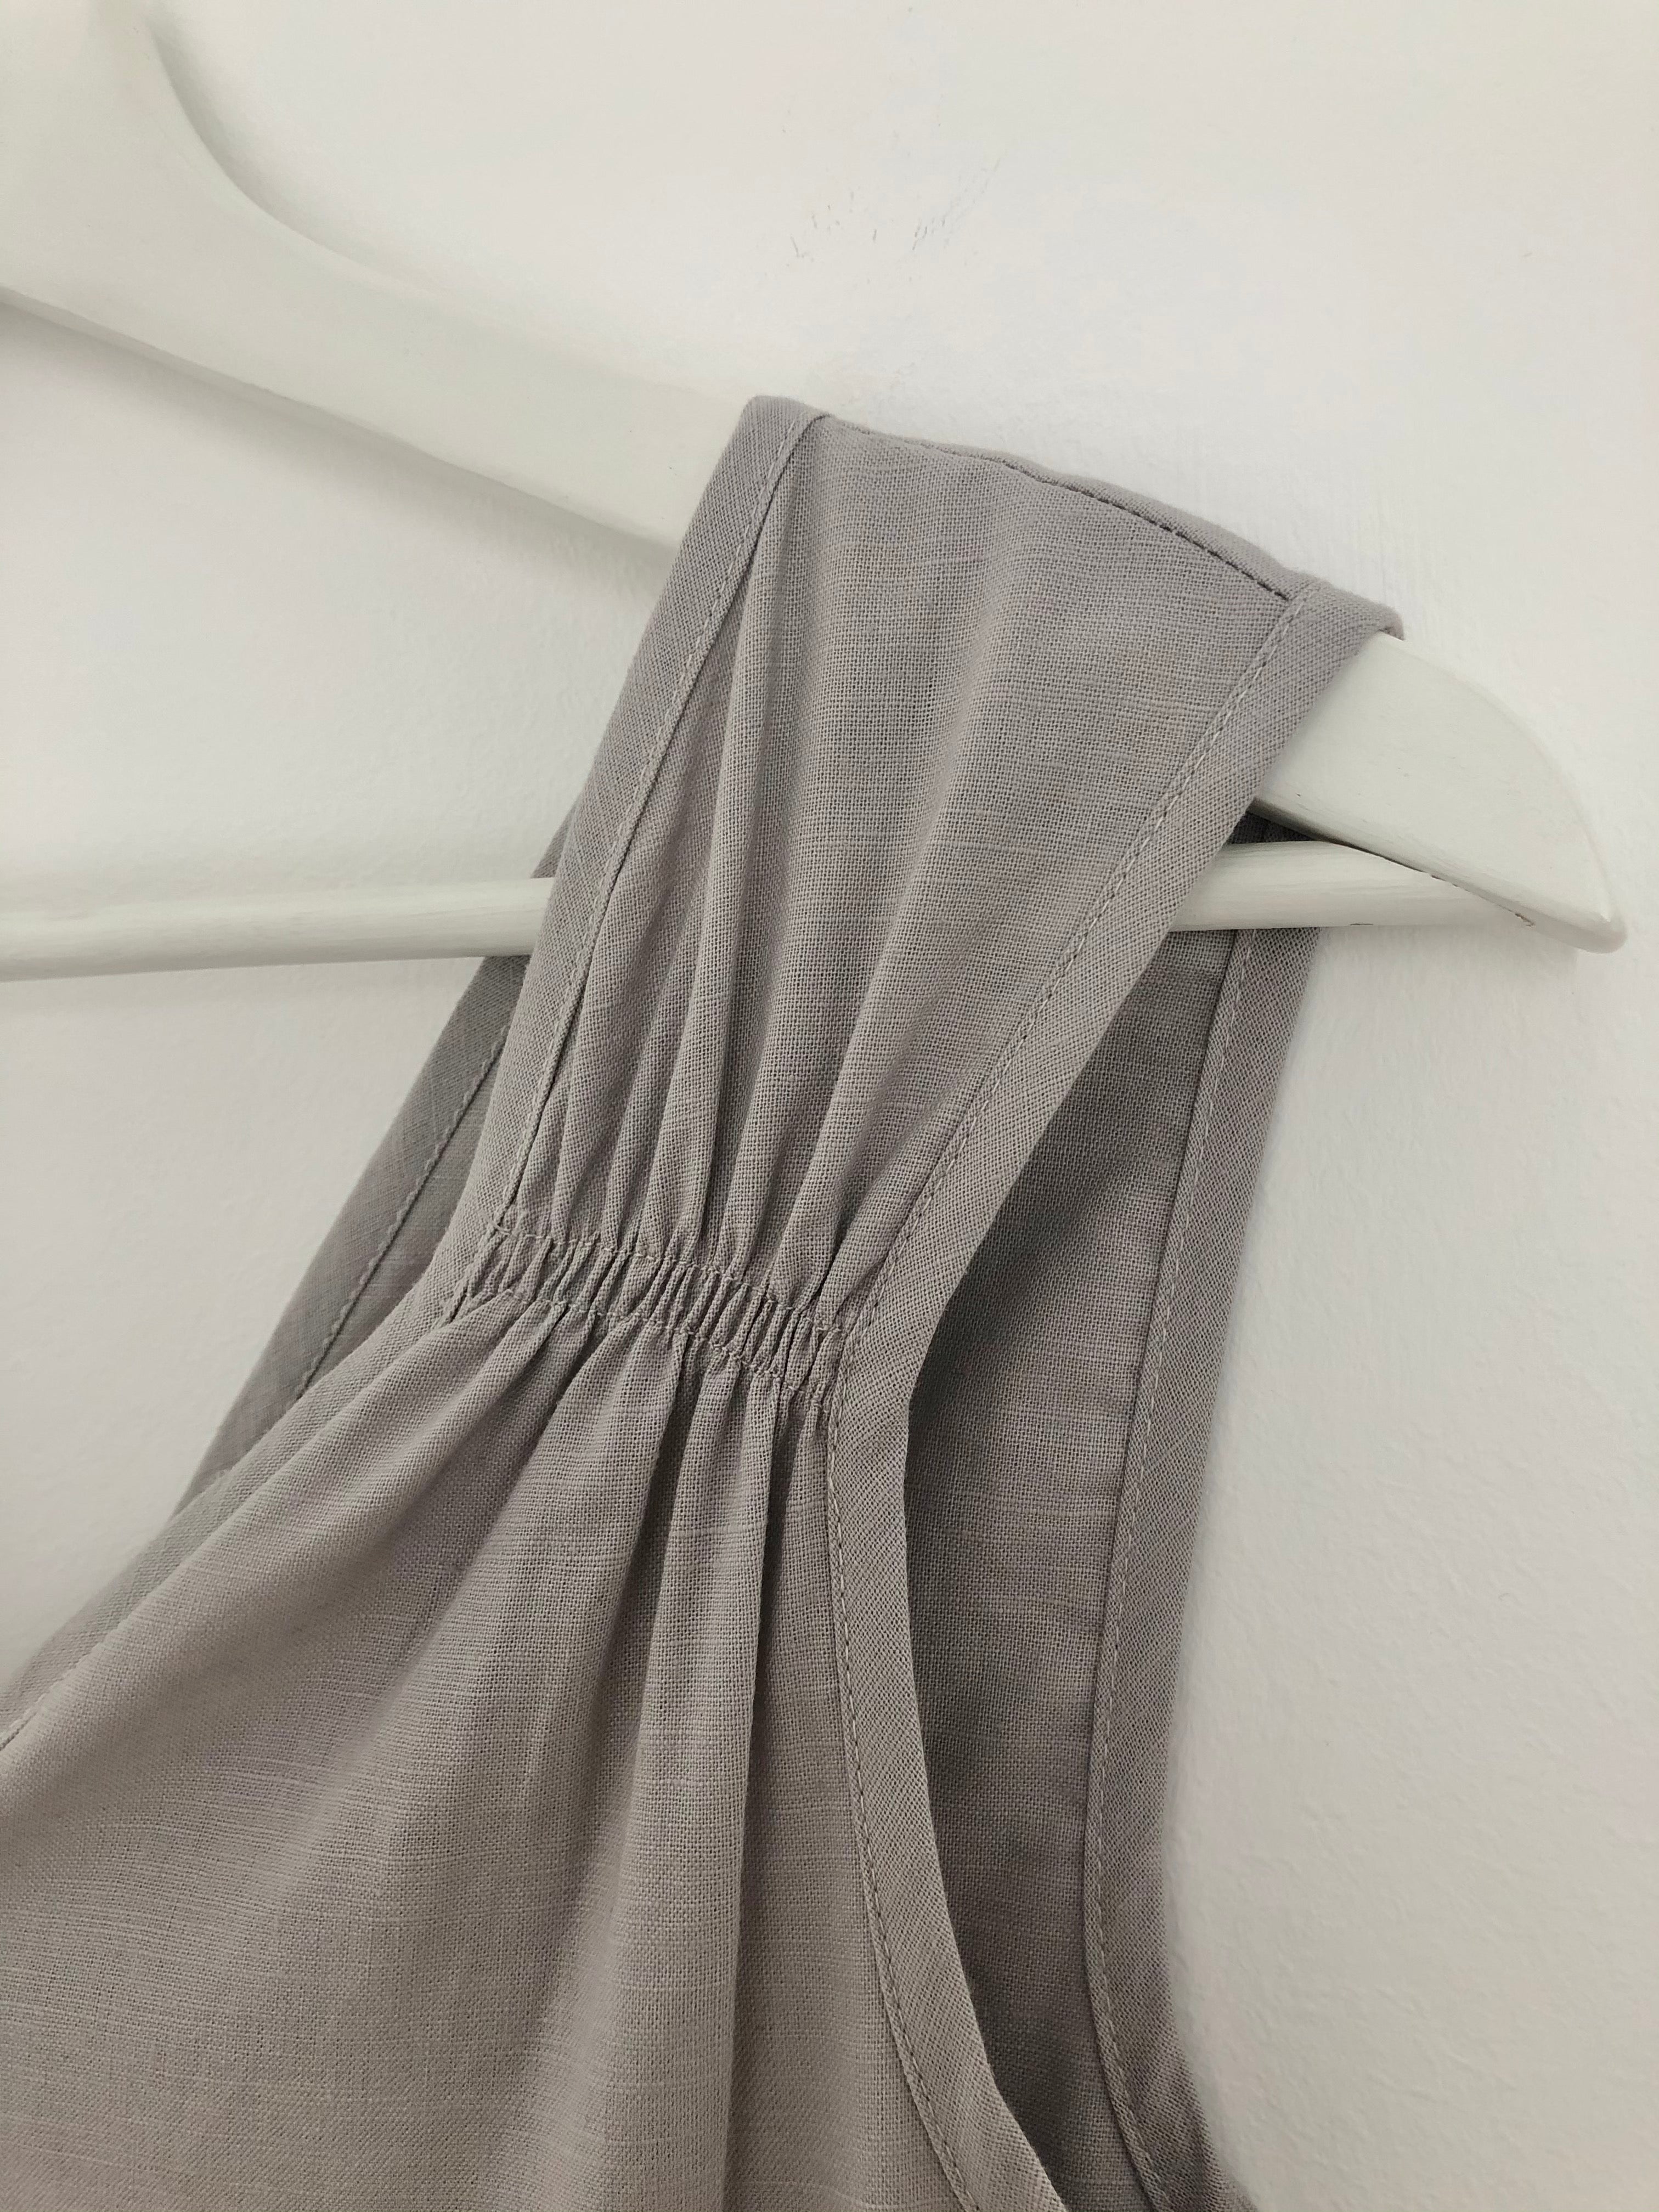 ASYMMETRICAL SHOULDER TEA DRESS in light grey